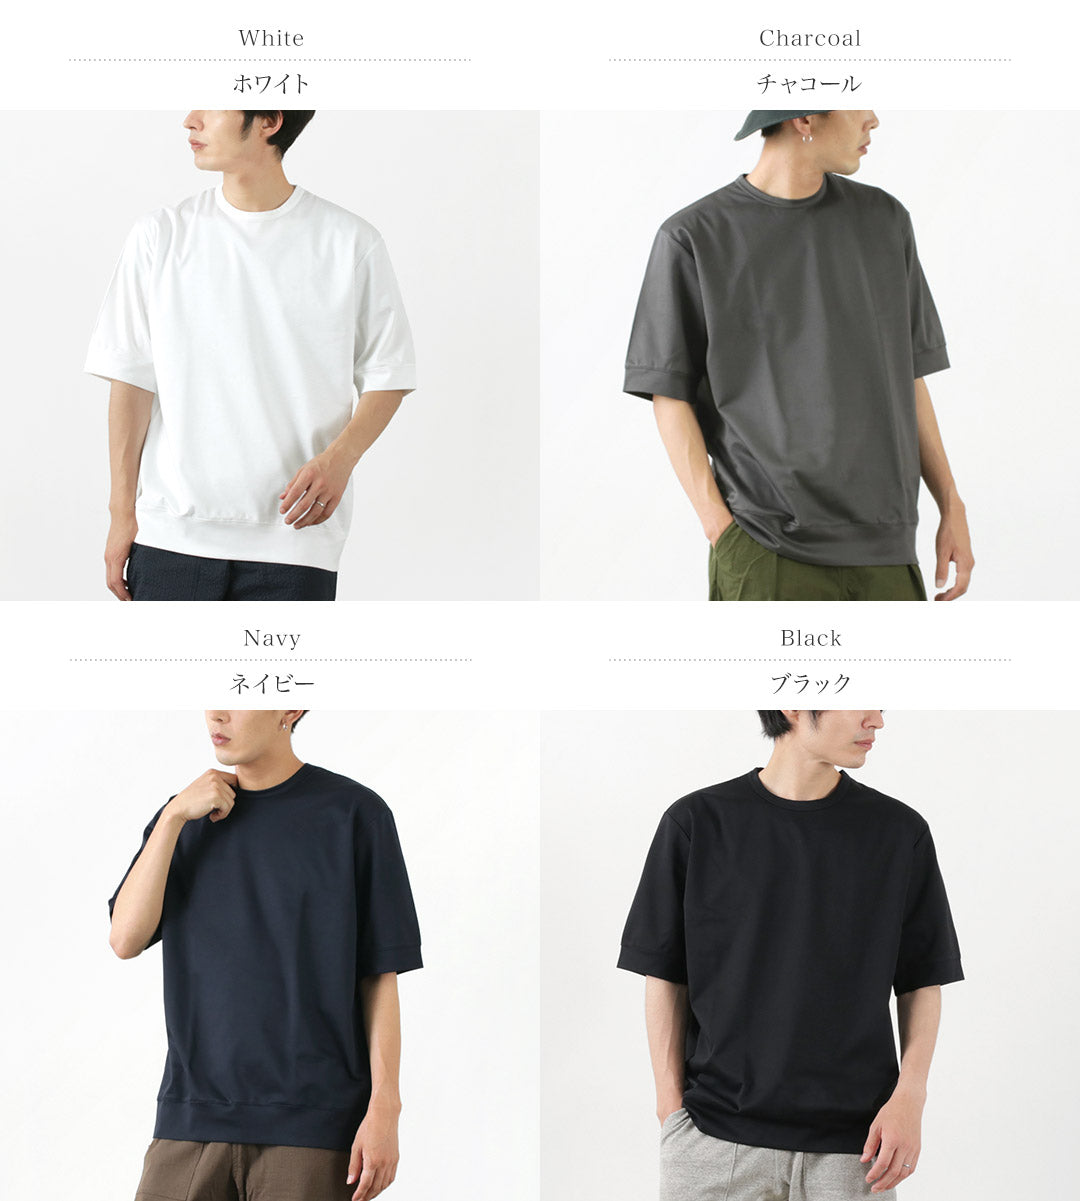 RE MADE IN TOKYO JAPAN（アールイー） ハーフスリーブ ワイドドレスTシャツ / メンズ トップス 半袖 無地 クルーネック 日本製 6022S-CT Half Sleeve Wide Dress T-shirt